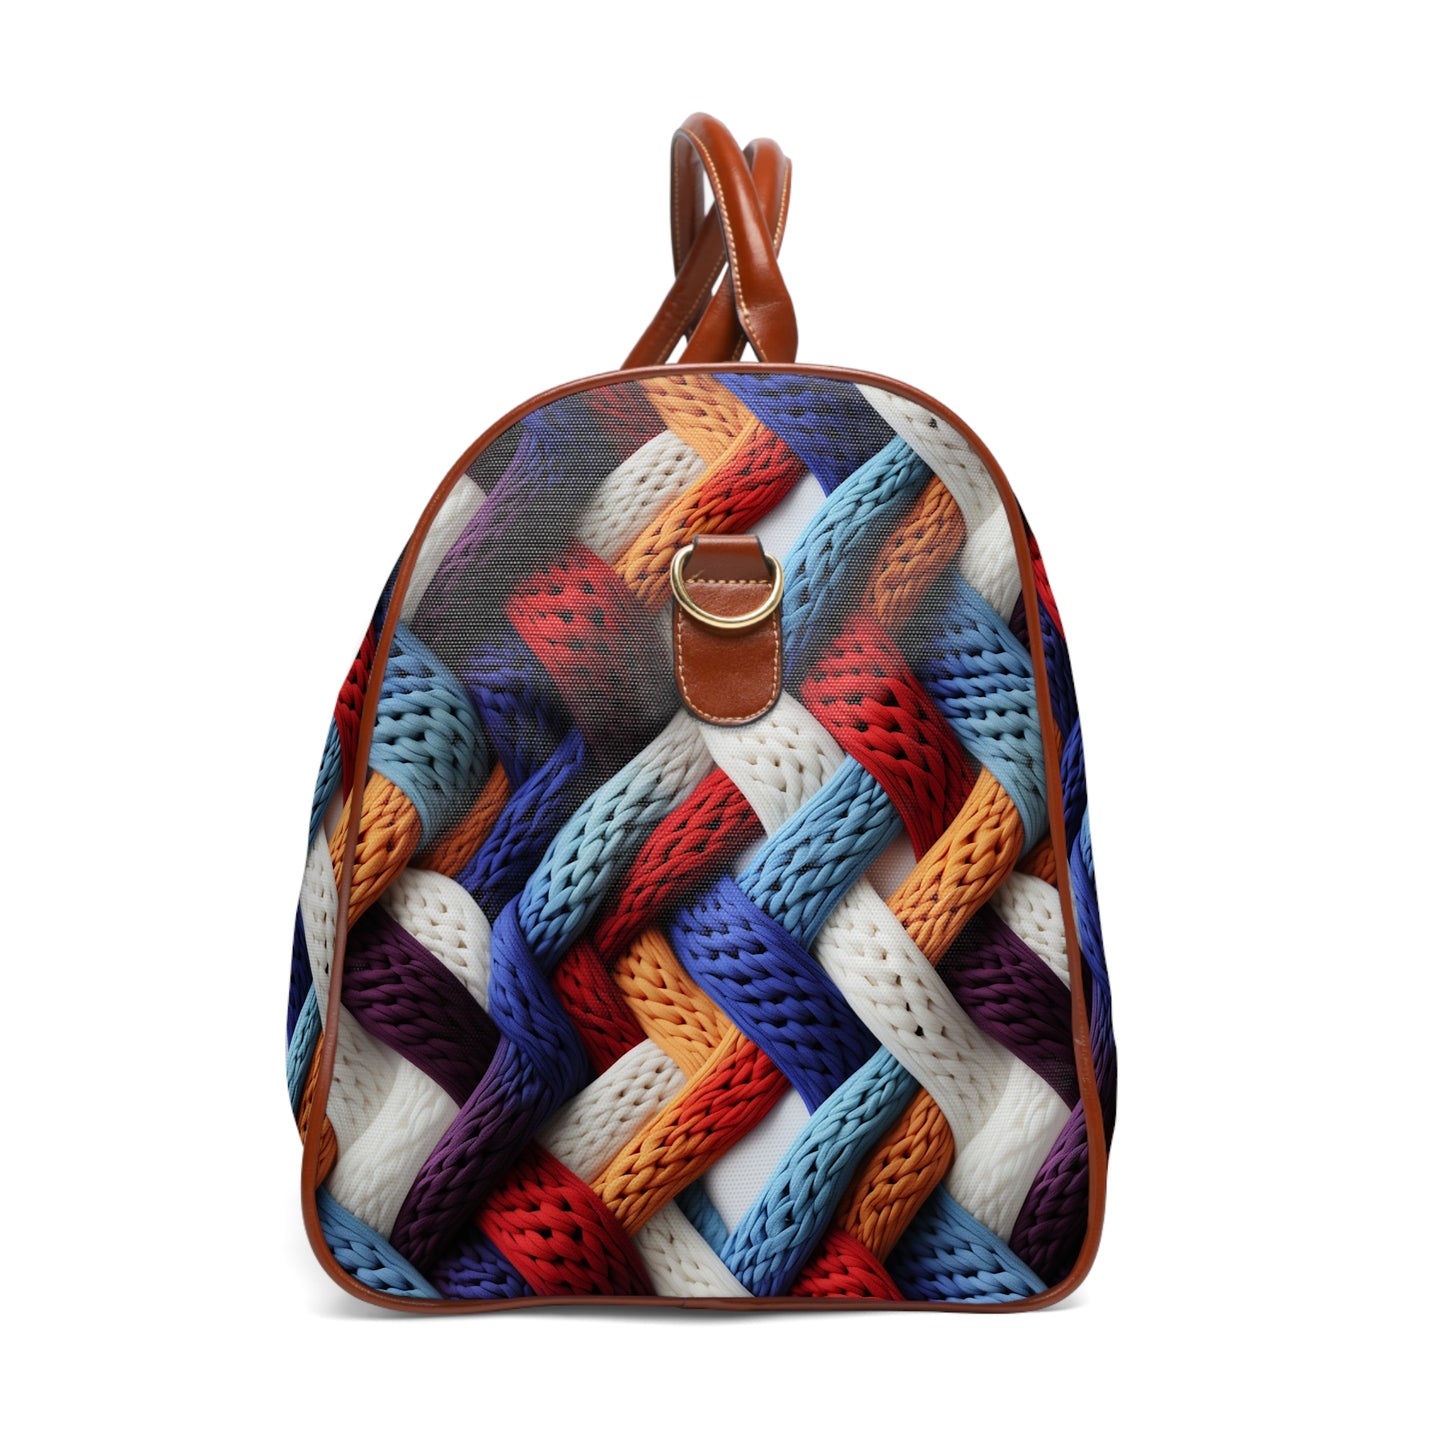 Tangled Knit Waterproof Travel Bag